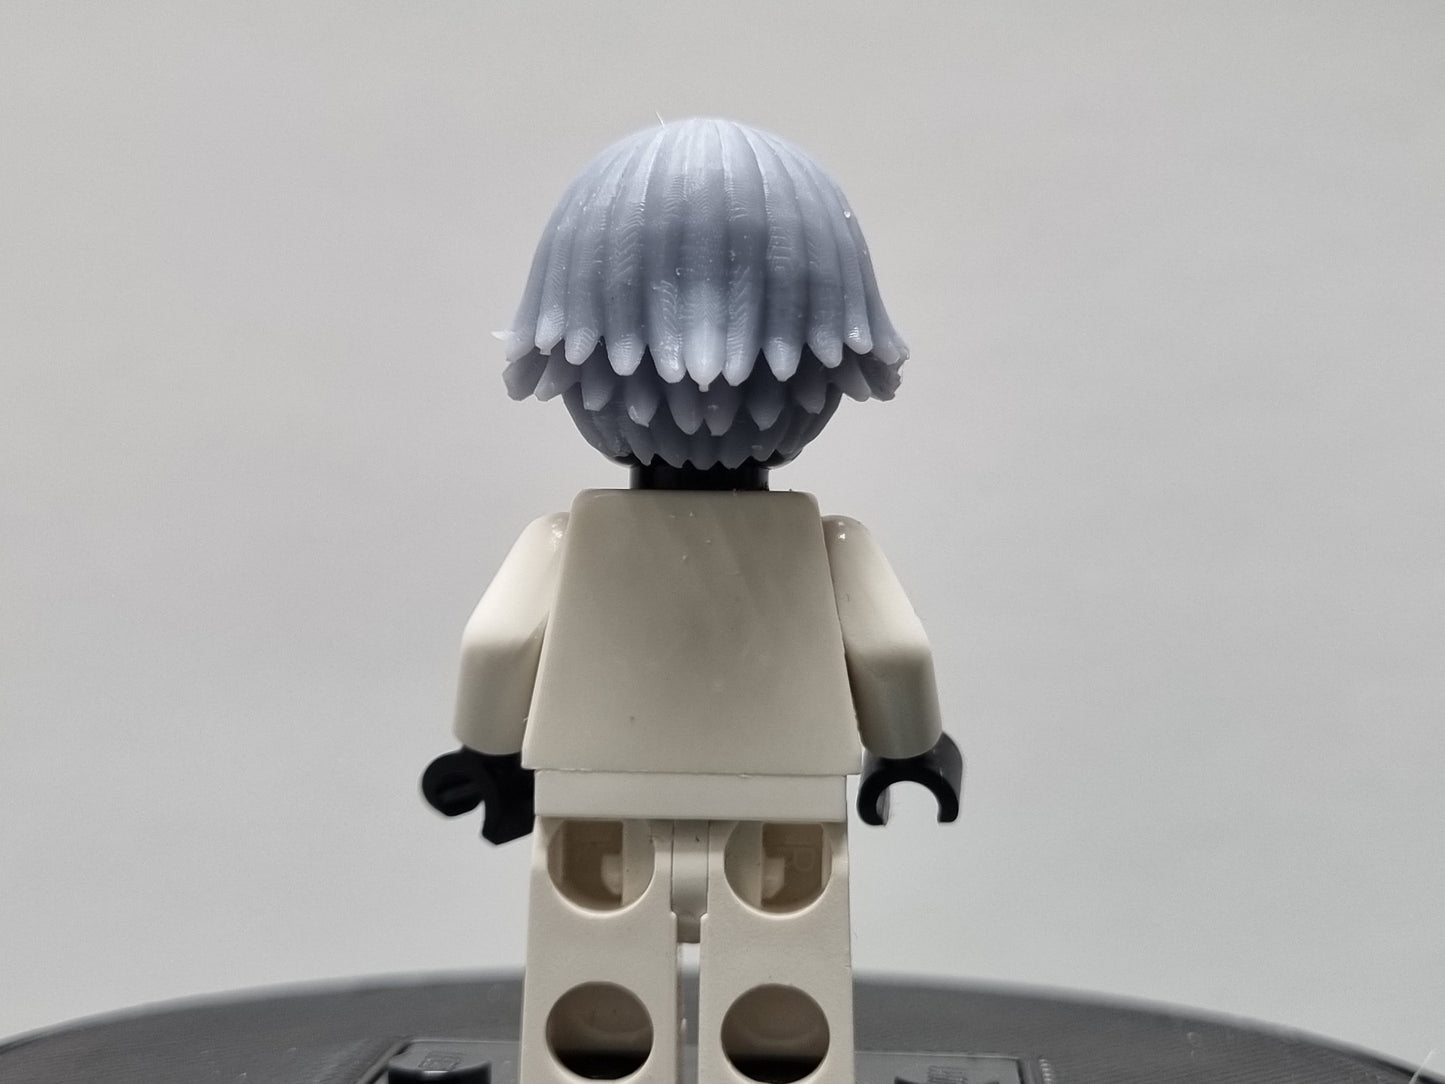 Building toy 3D printed predator hairpack!